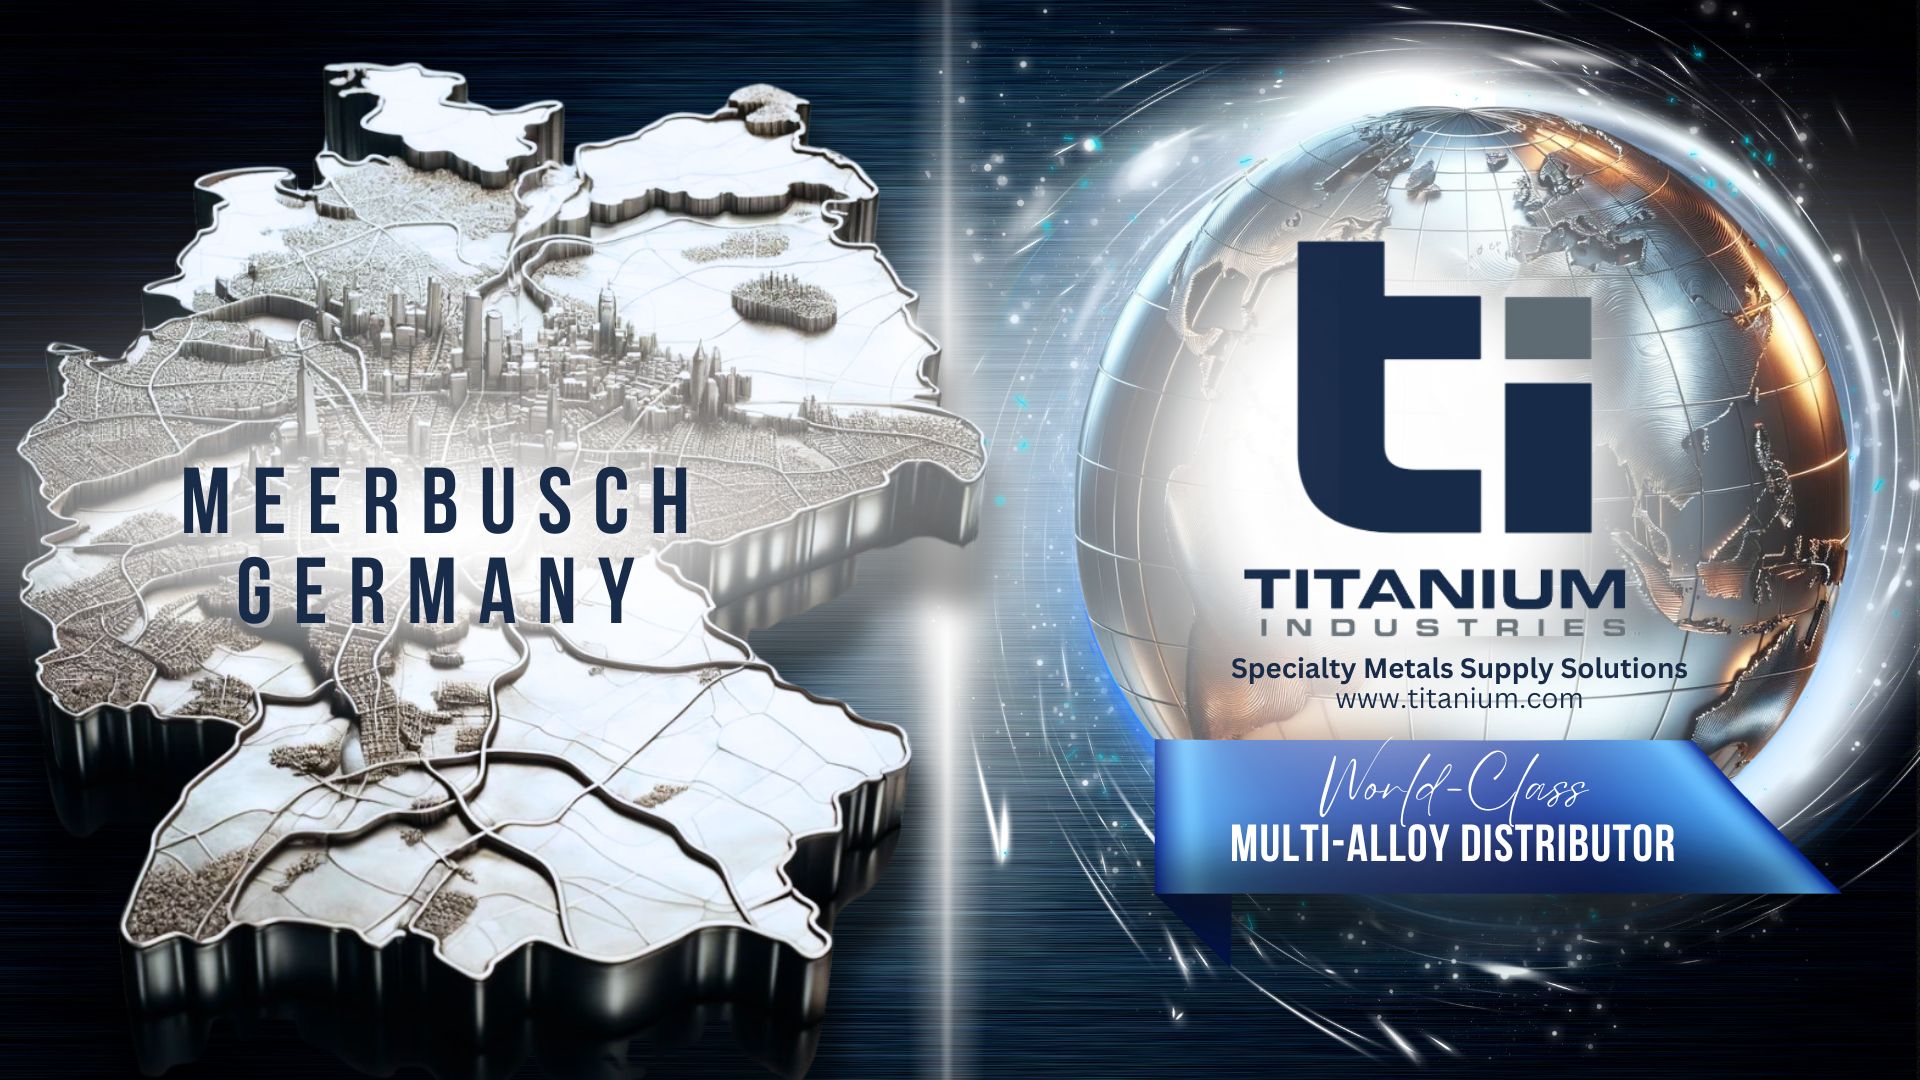 Titanium Industries Germany